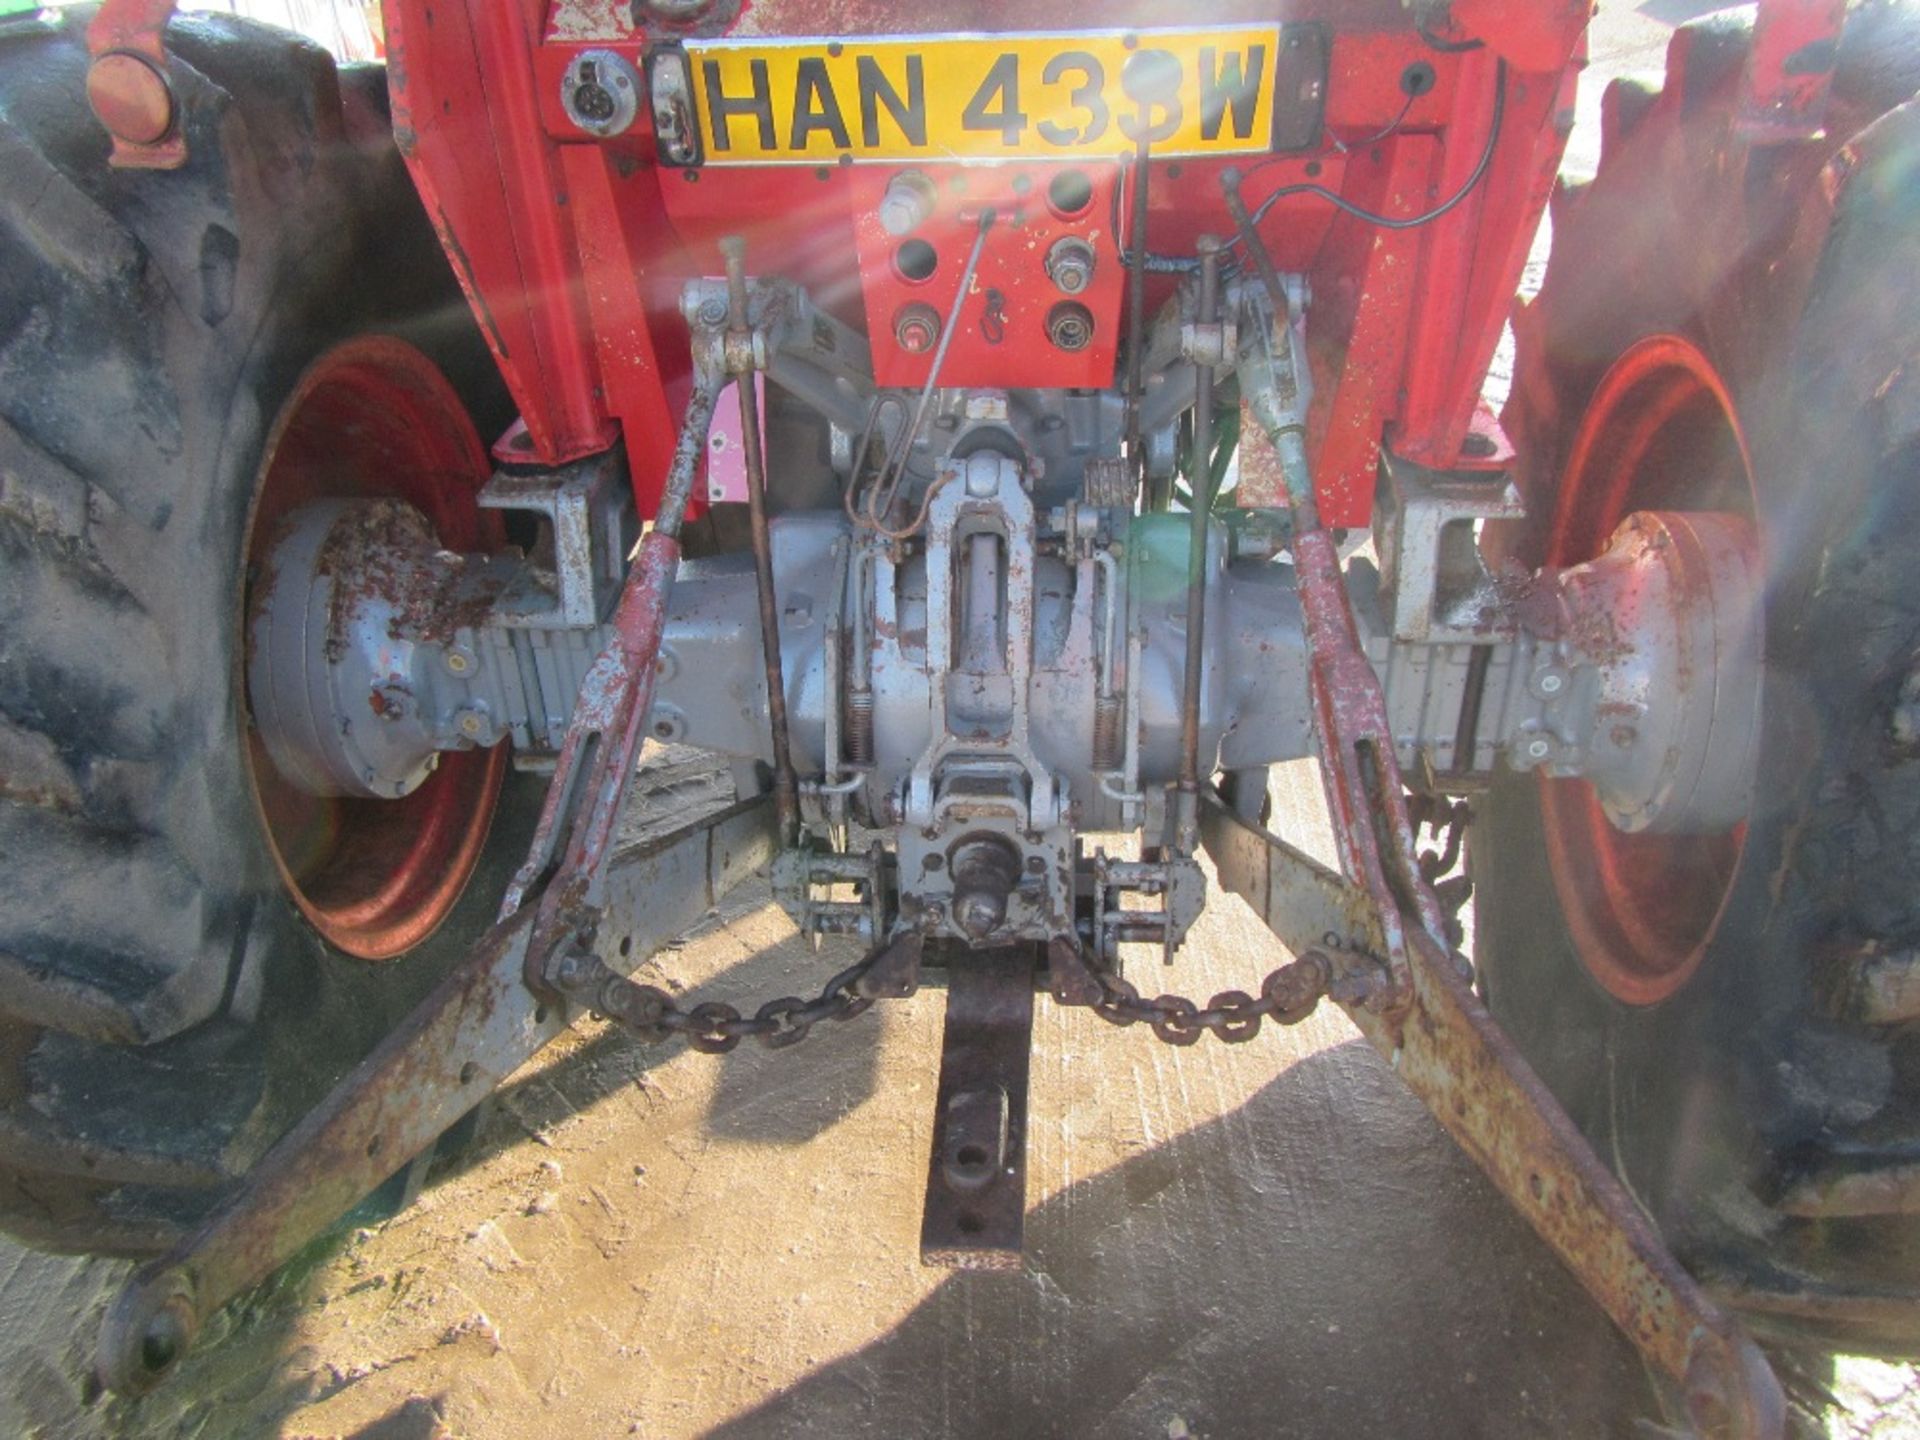 Massey Ferguson 590 Tractor c/w 2 Door Cab & Wide Back Wheels. No V5. 4800 hrs. Reg. No. HAN 433W - Image 7 of 17